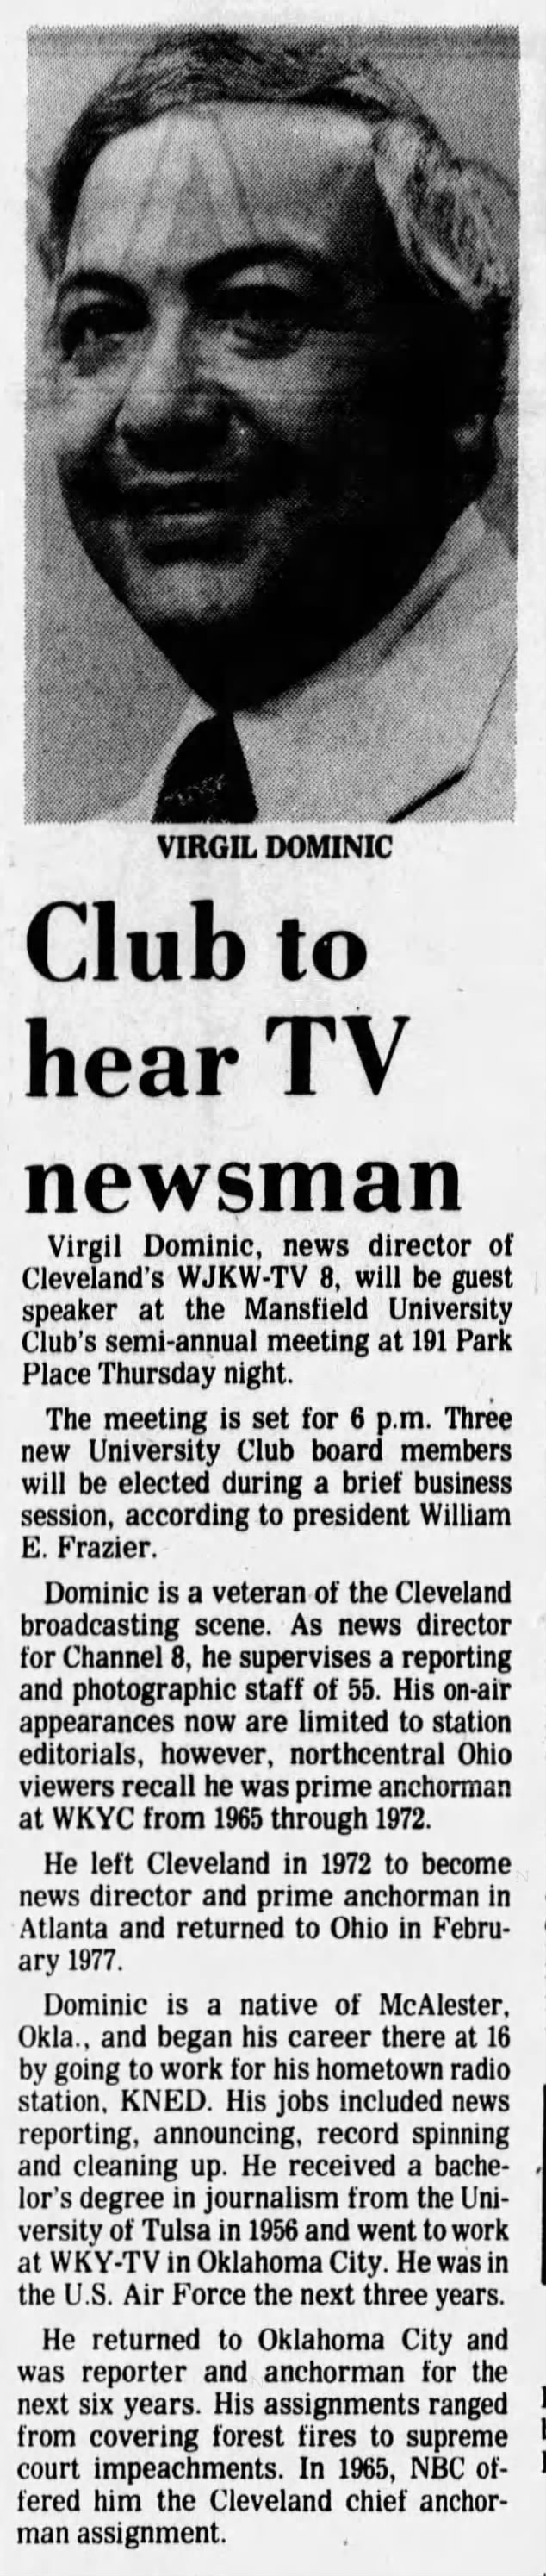 Club to hear TV newsman